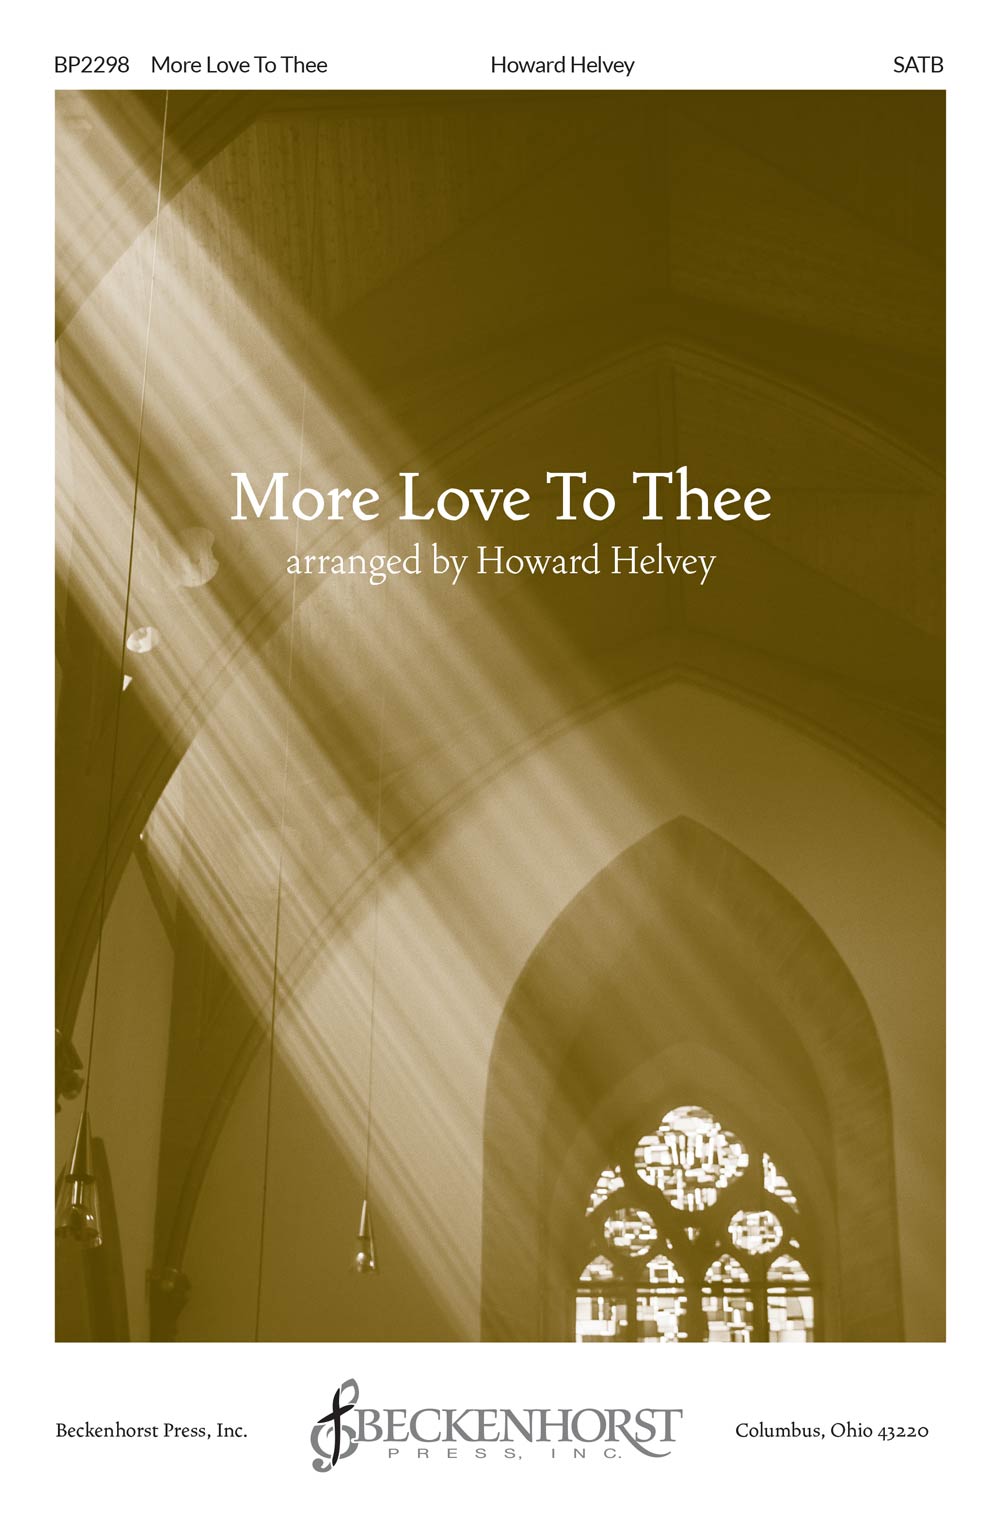 More Love to Thee church choir sheet music cover